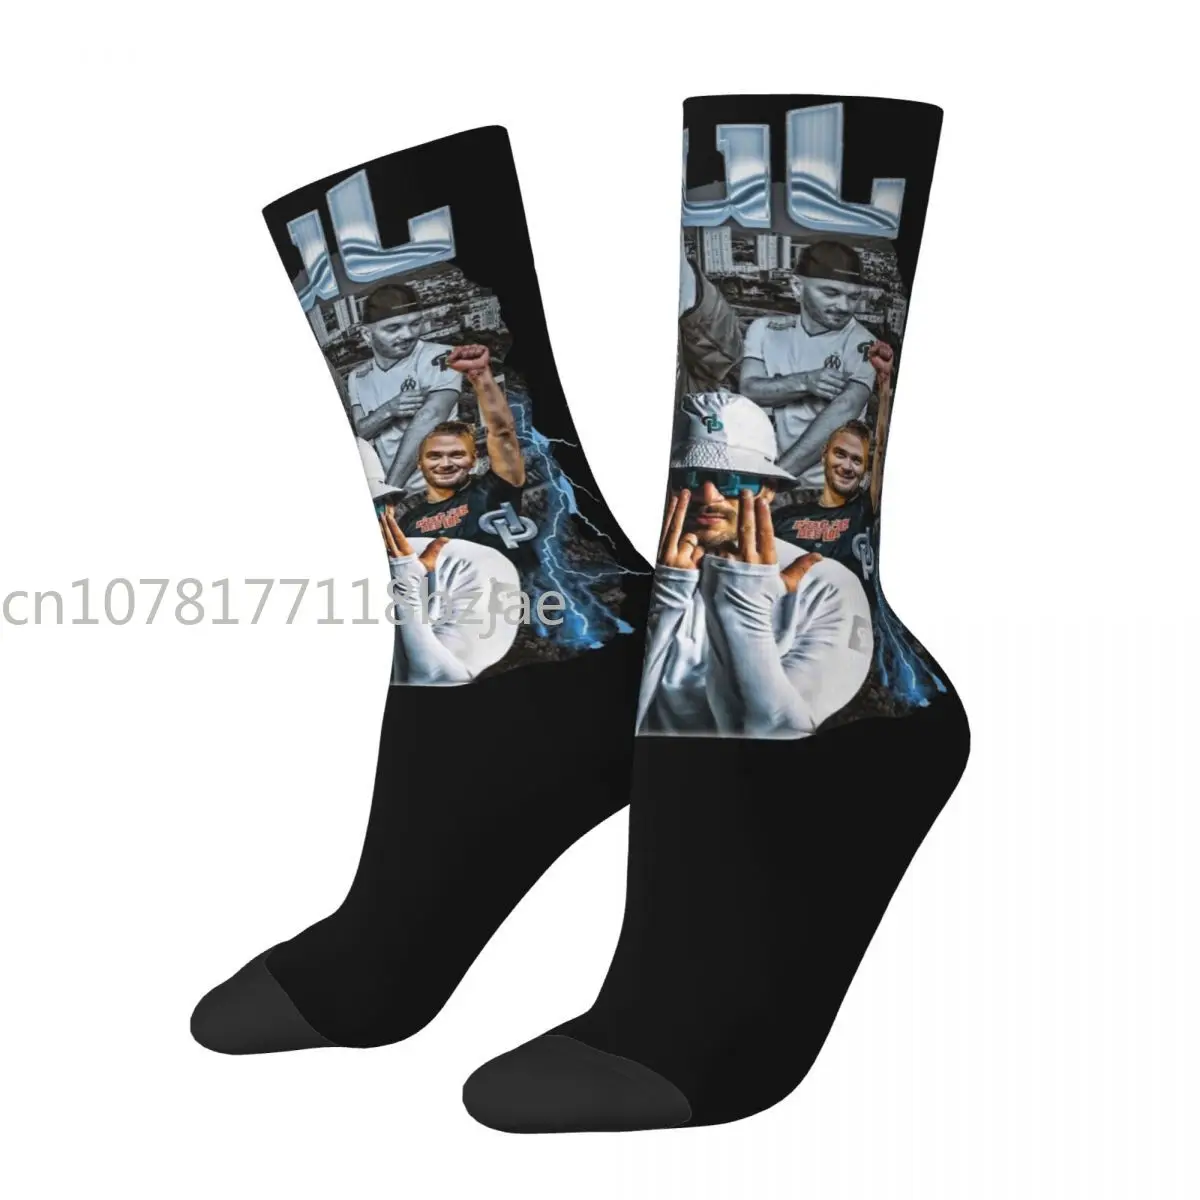 

Crazy Design Unisex Rapper Jul Bootleg Dress Socks Vintage Merchandise Middle Tube Socks Super Soft Best Gifts